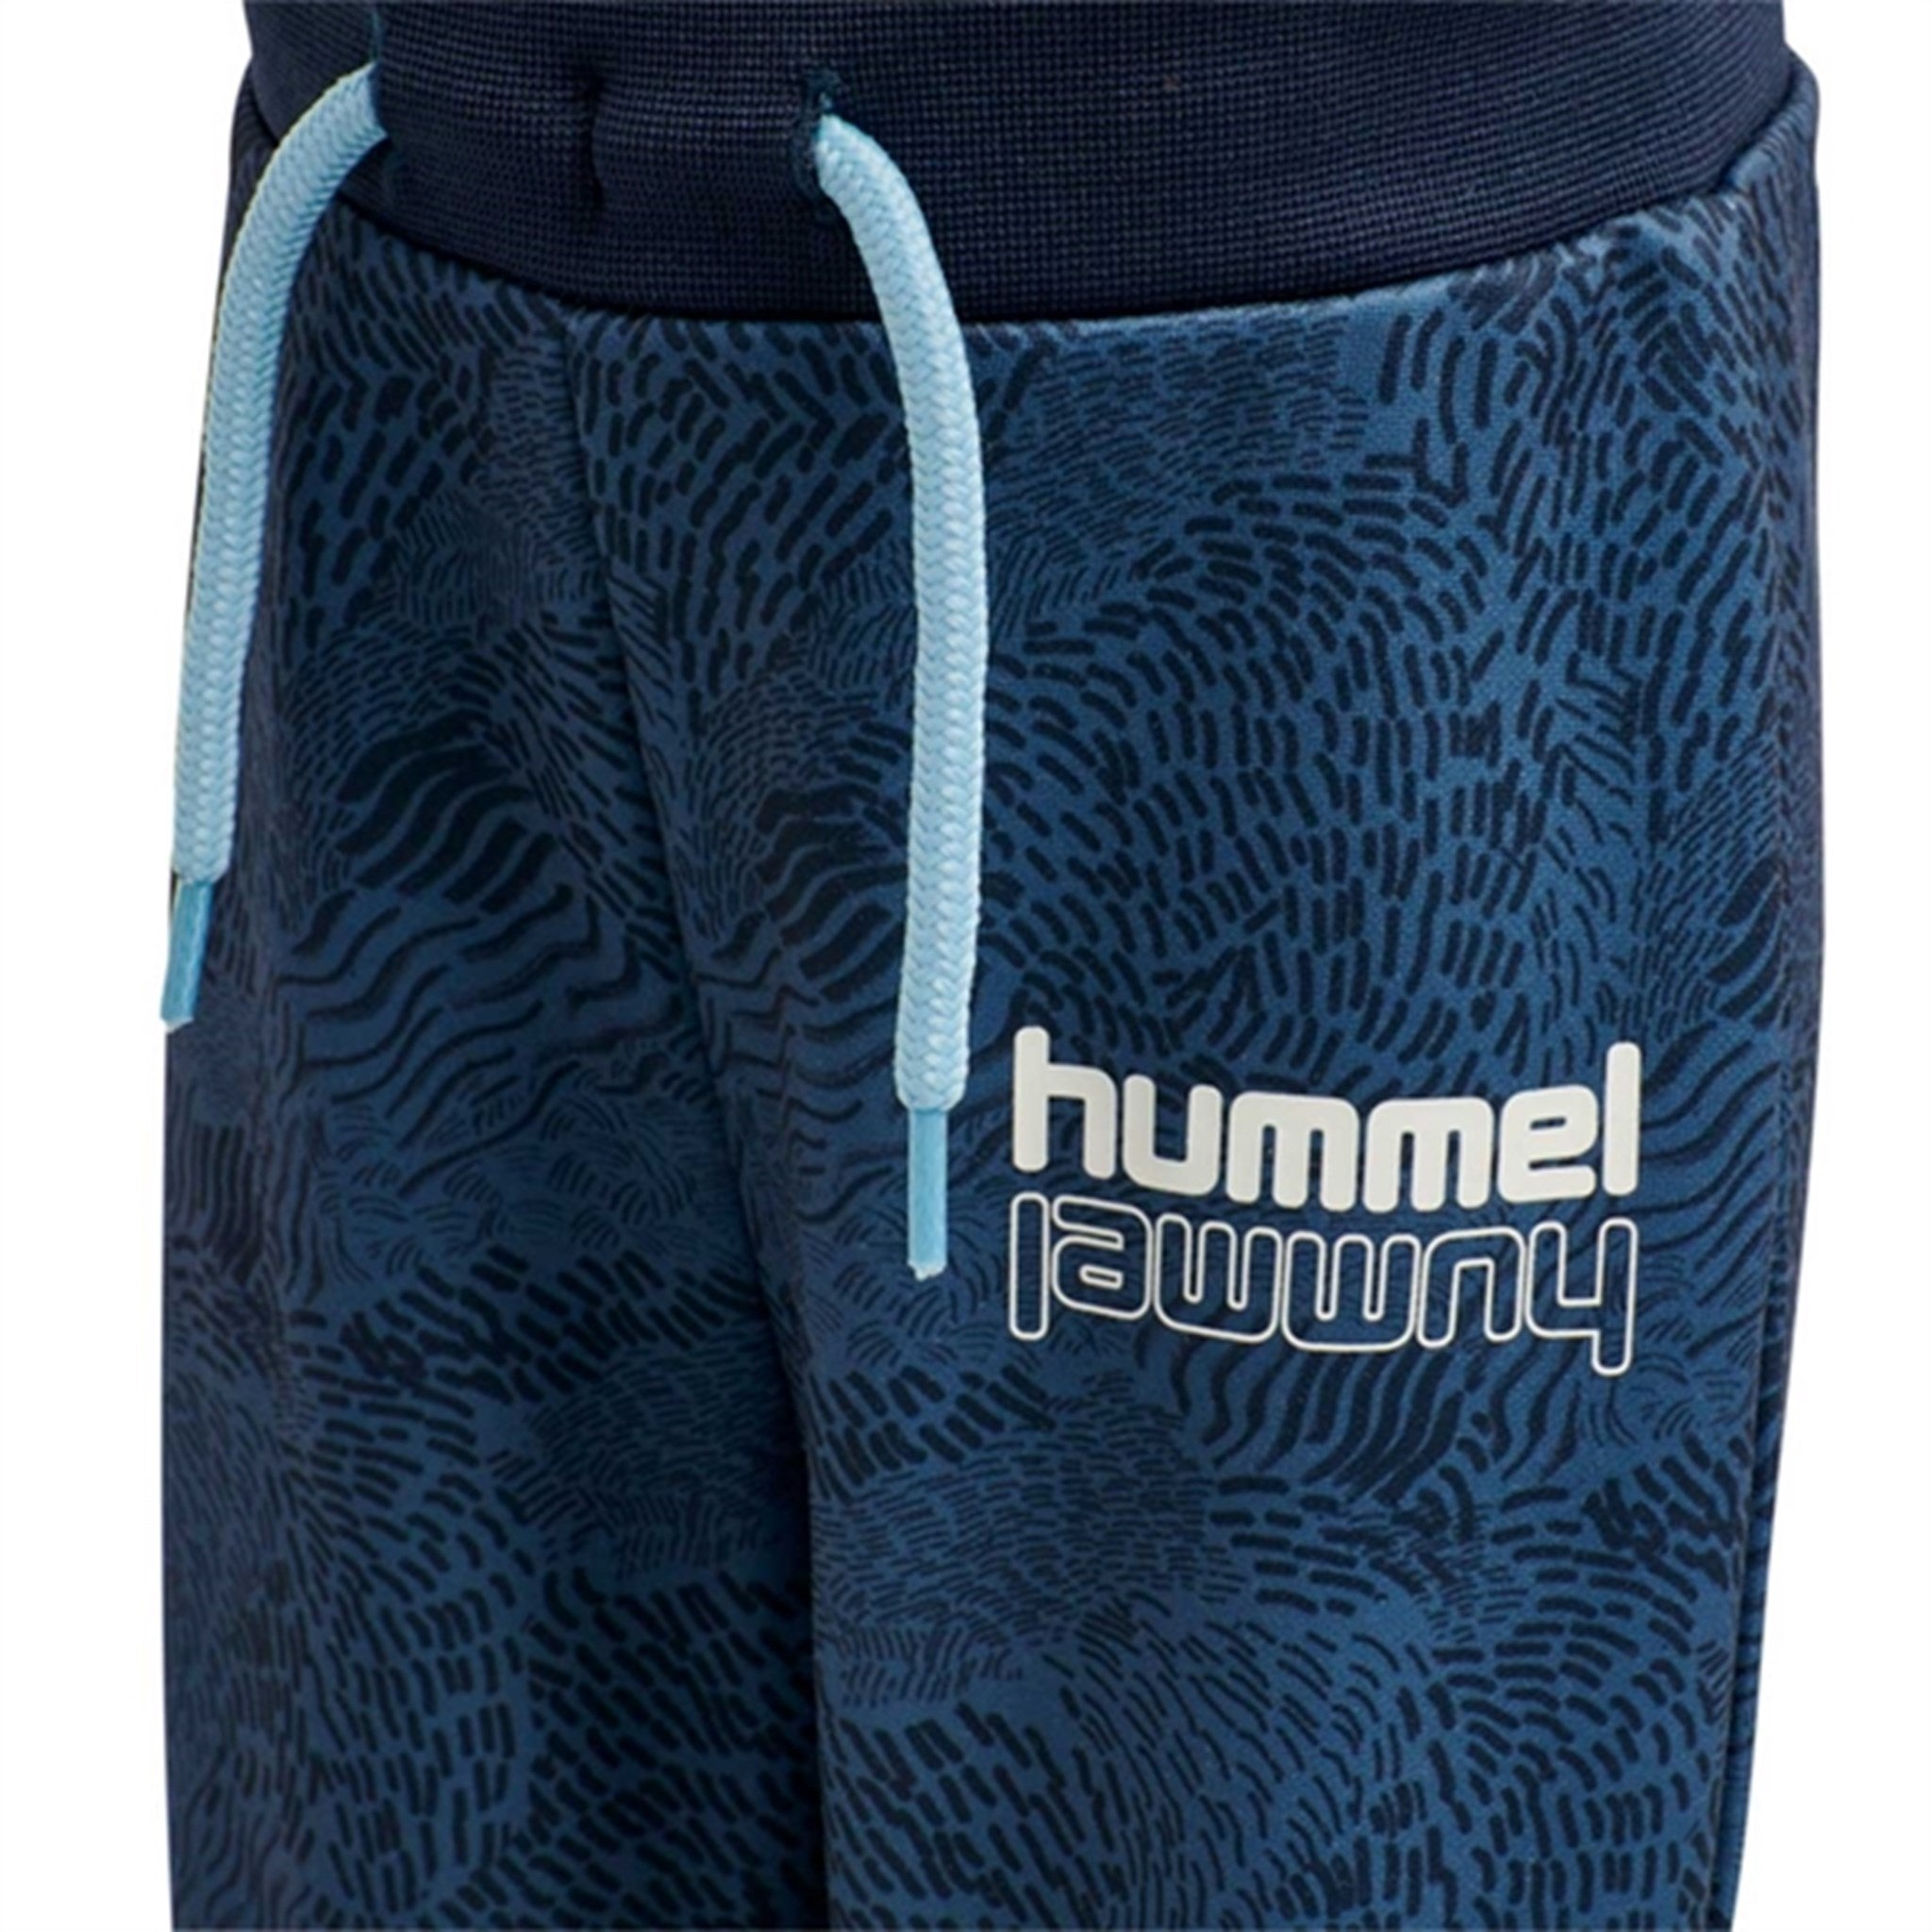 Hummel China Blue Baily Pants 4